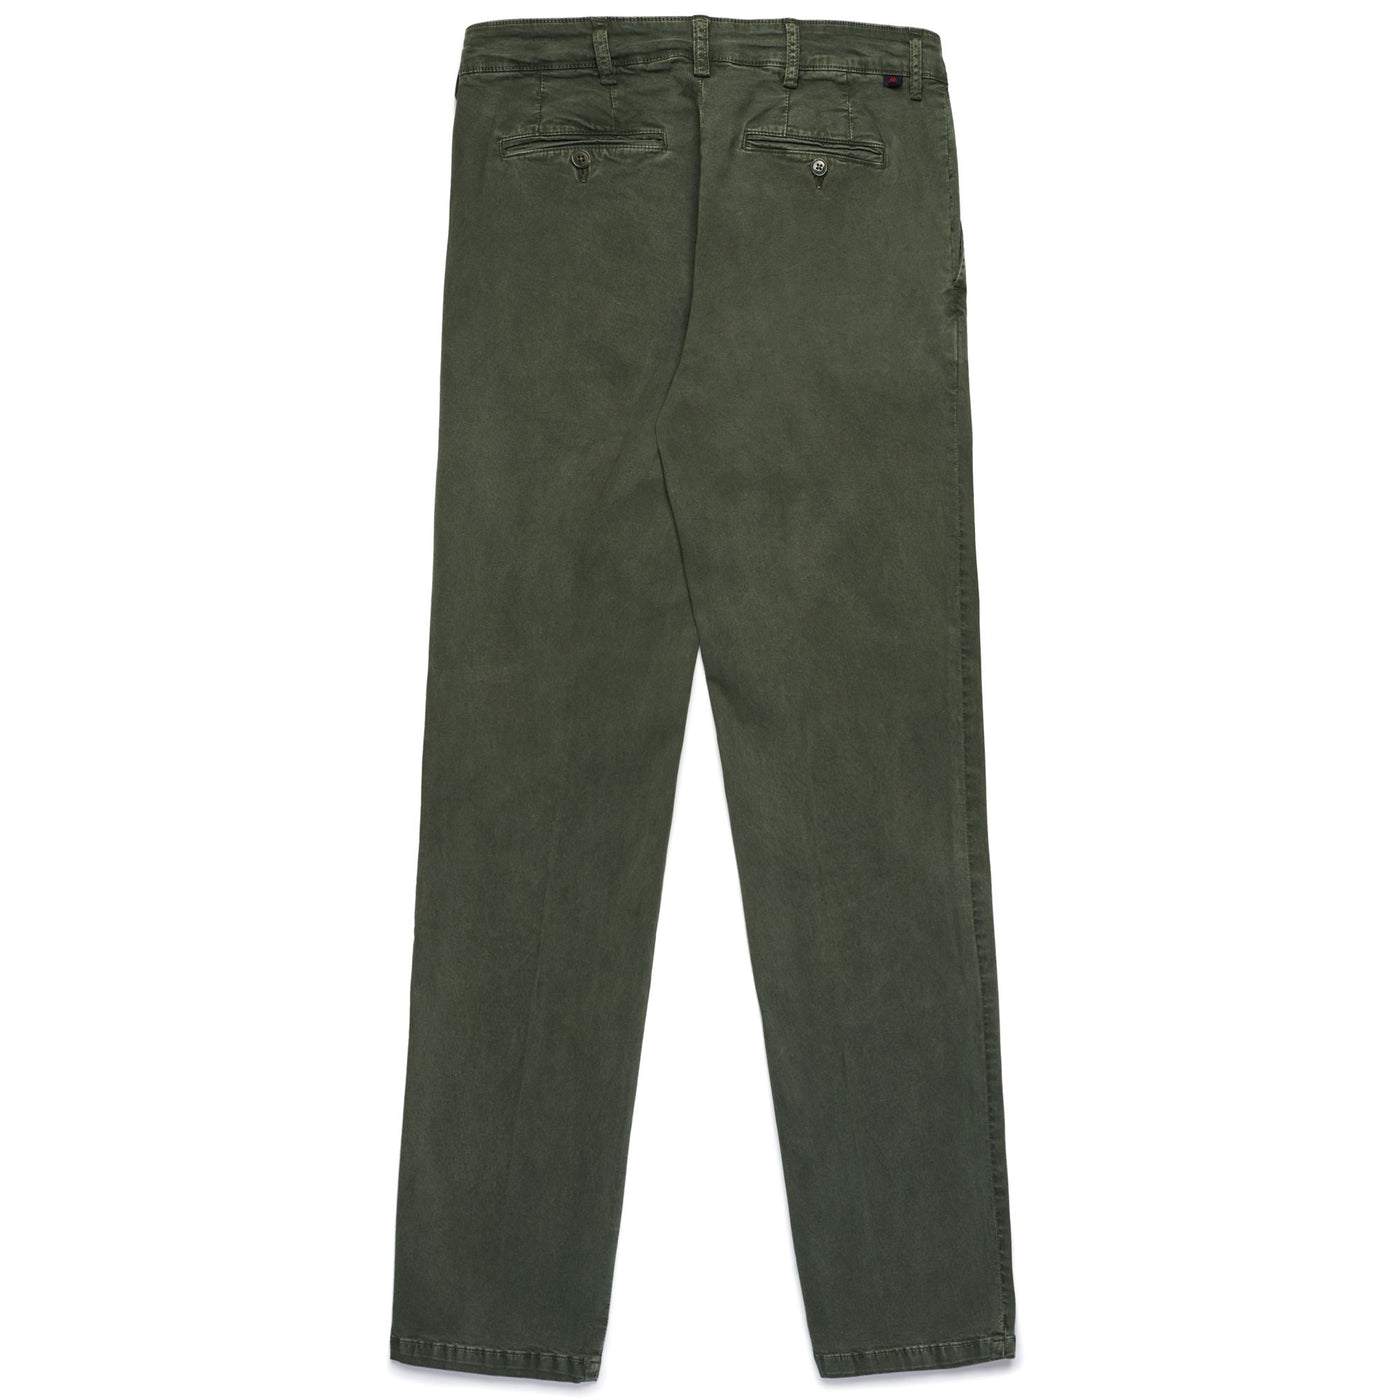 Pants Man WERNER PEACHED GABARDINE CHINO GREEN MILITARY Dressed Front (jpg Rgb)	